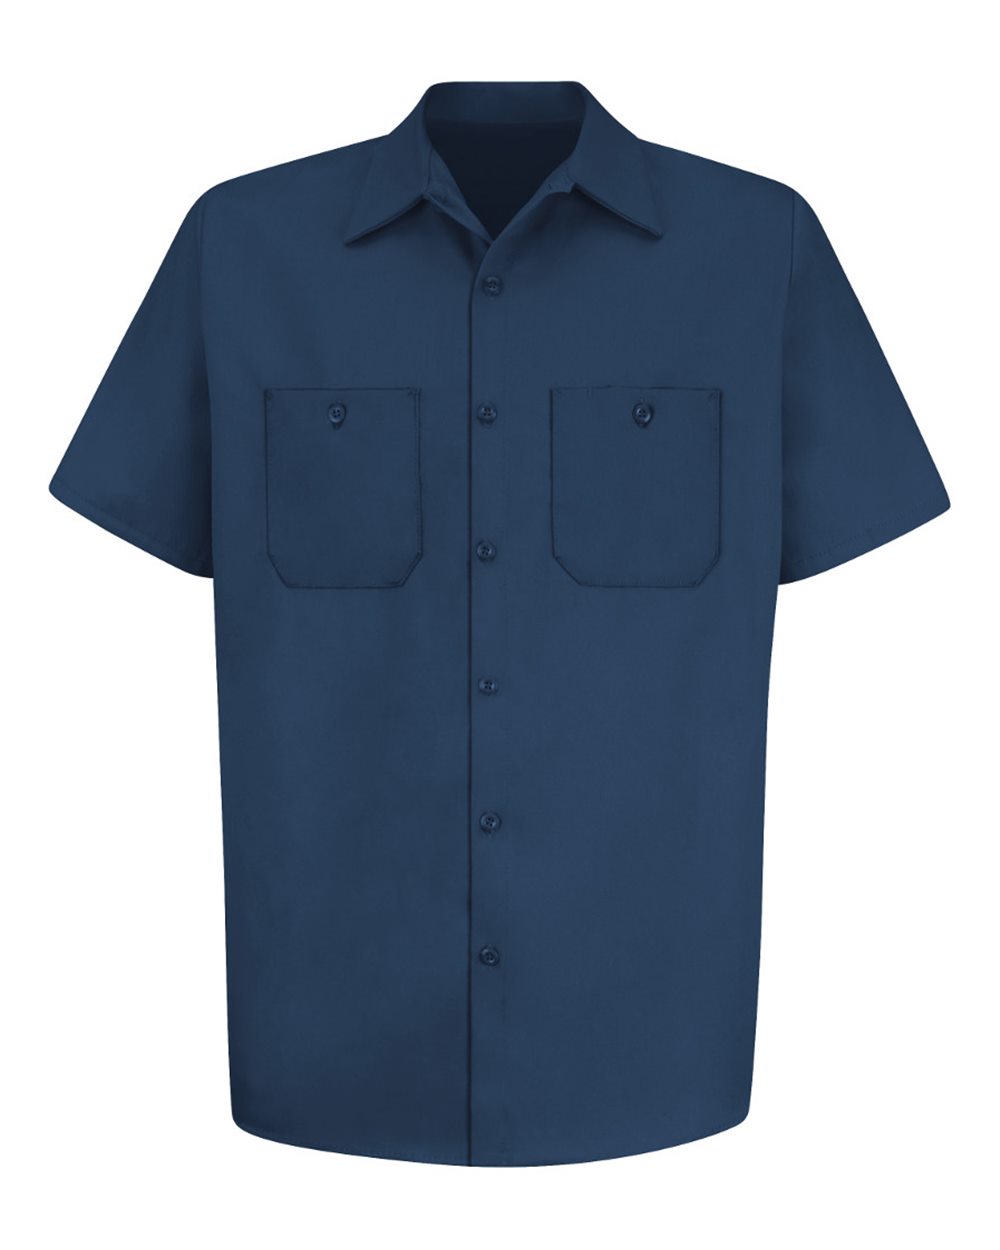 86730 Short Sleeve Uniform Shirt - SC40